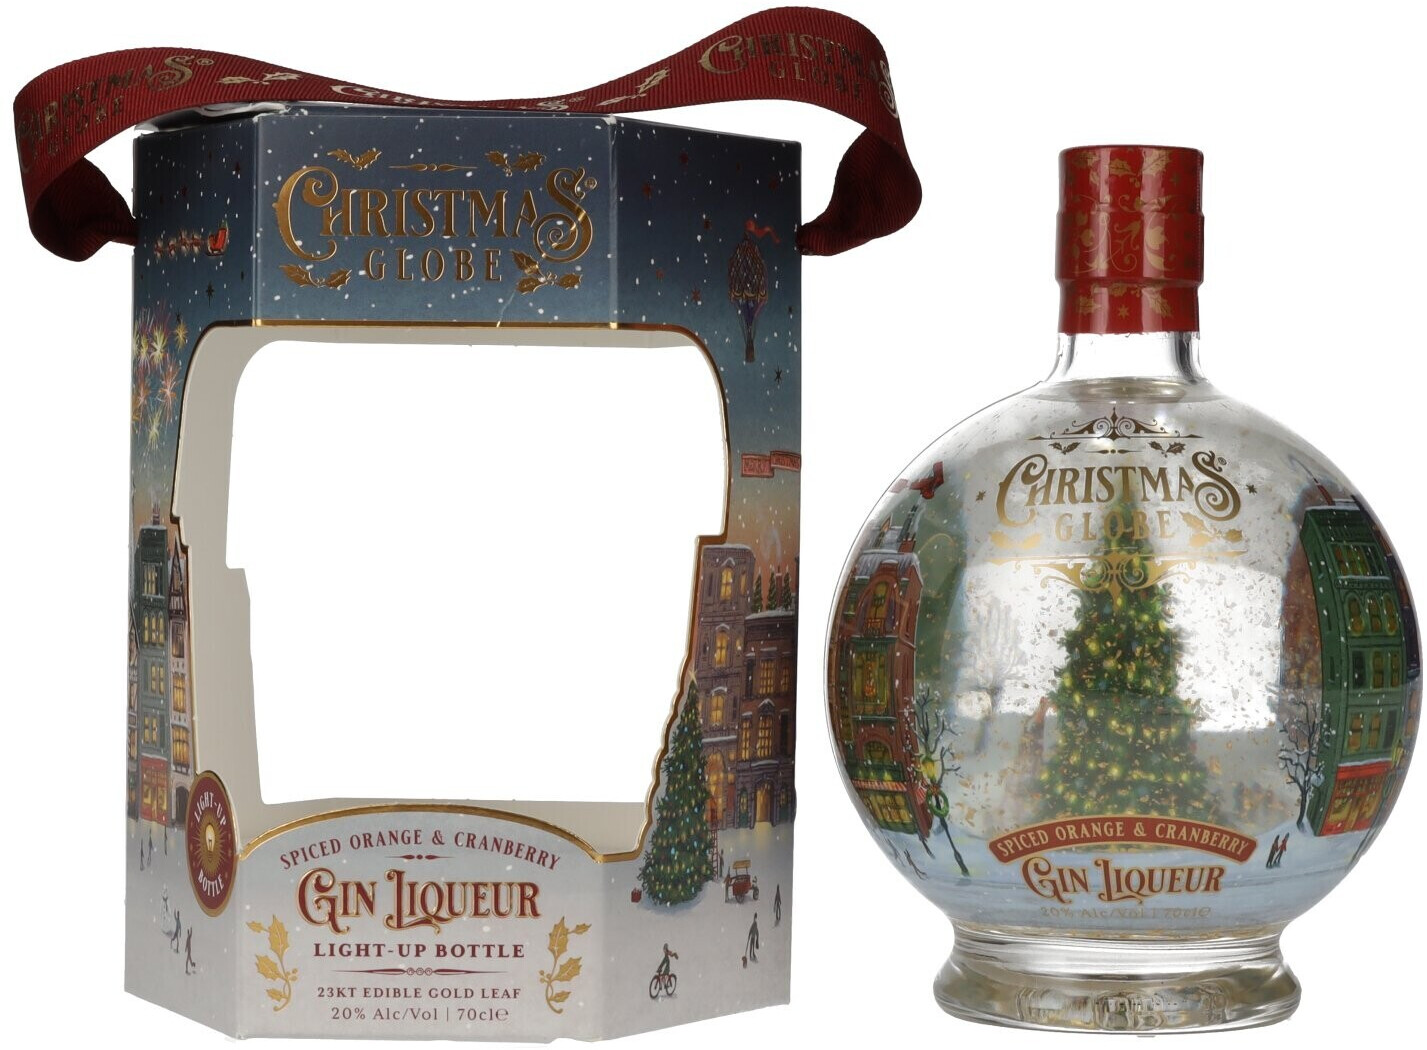 Christmas Globe Spiced Orange & Cranberry Gin Liqueur 0,7l 20% ab 29,90 € |  Preisvergleich bei